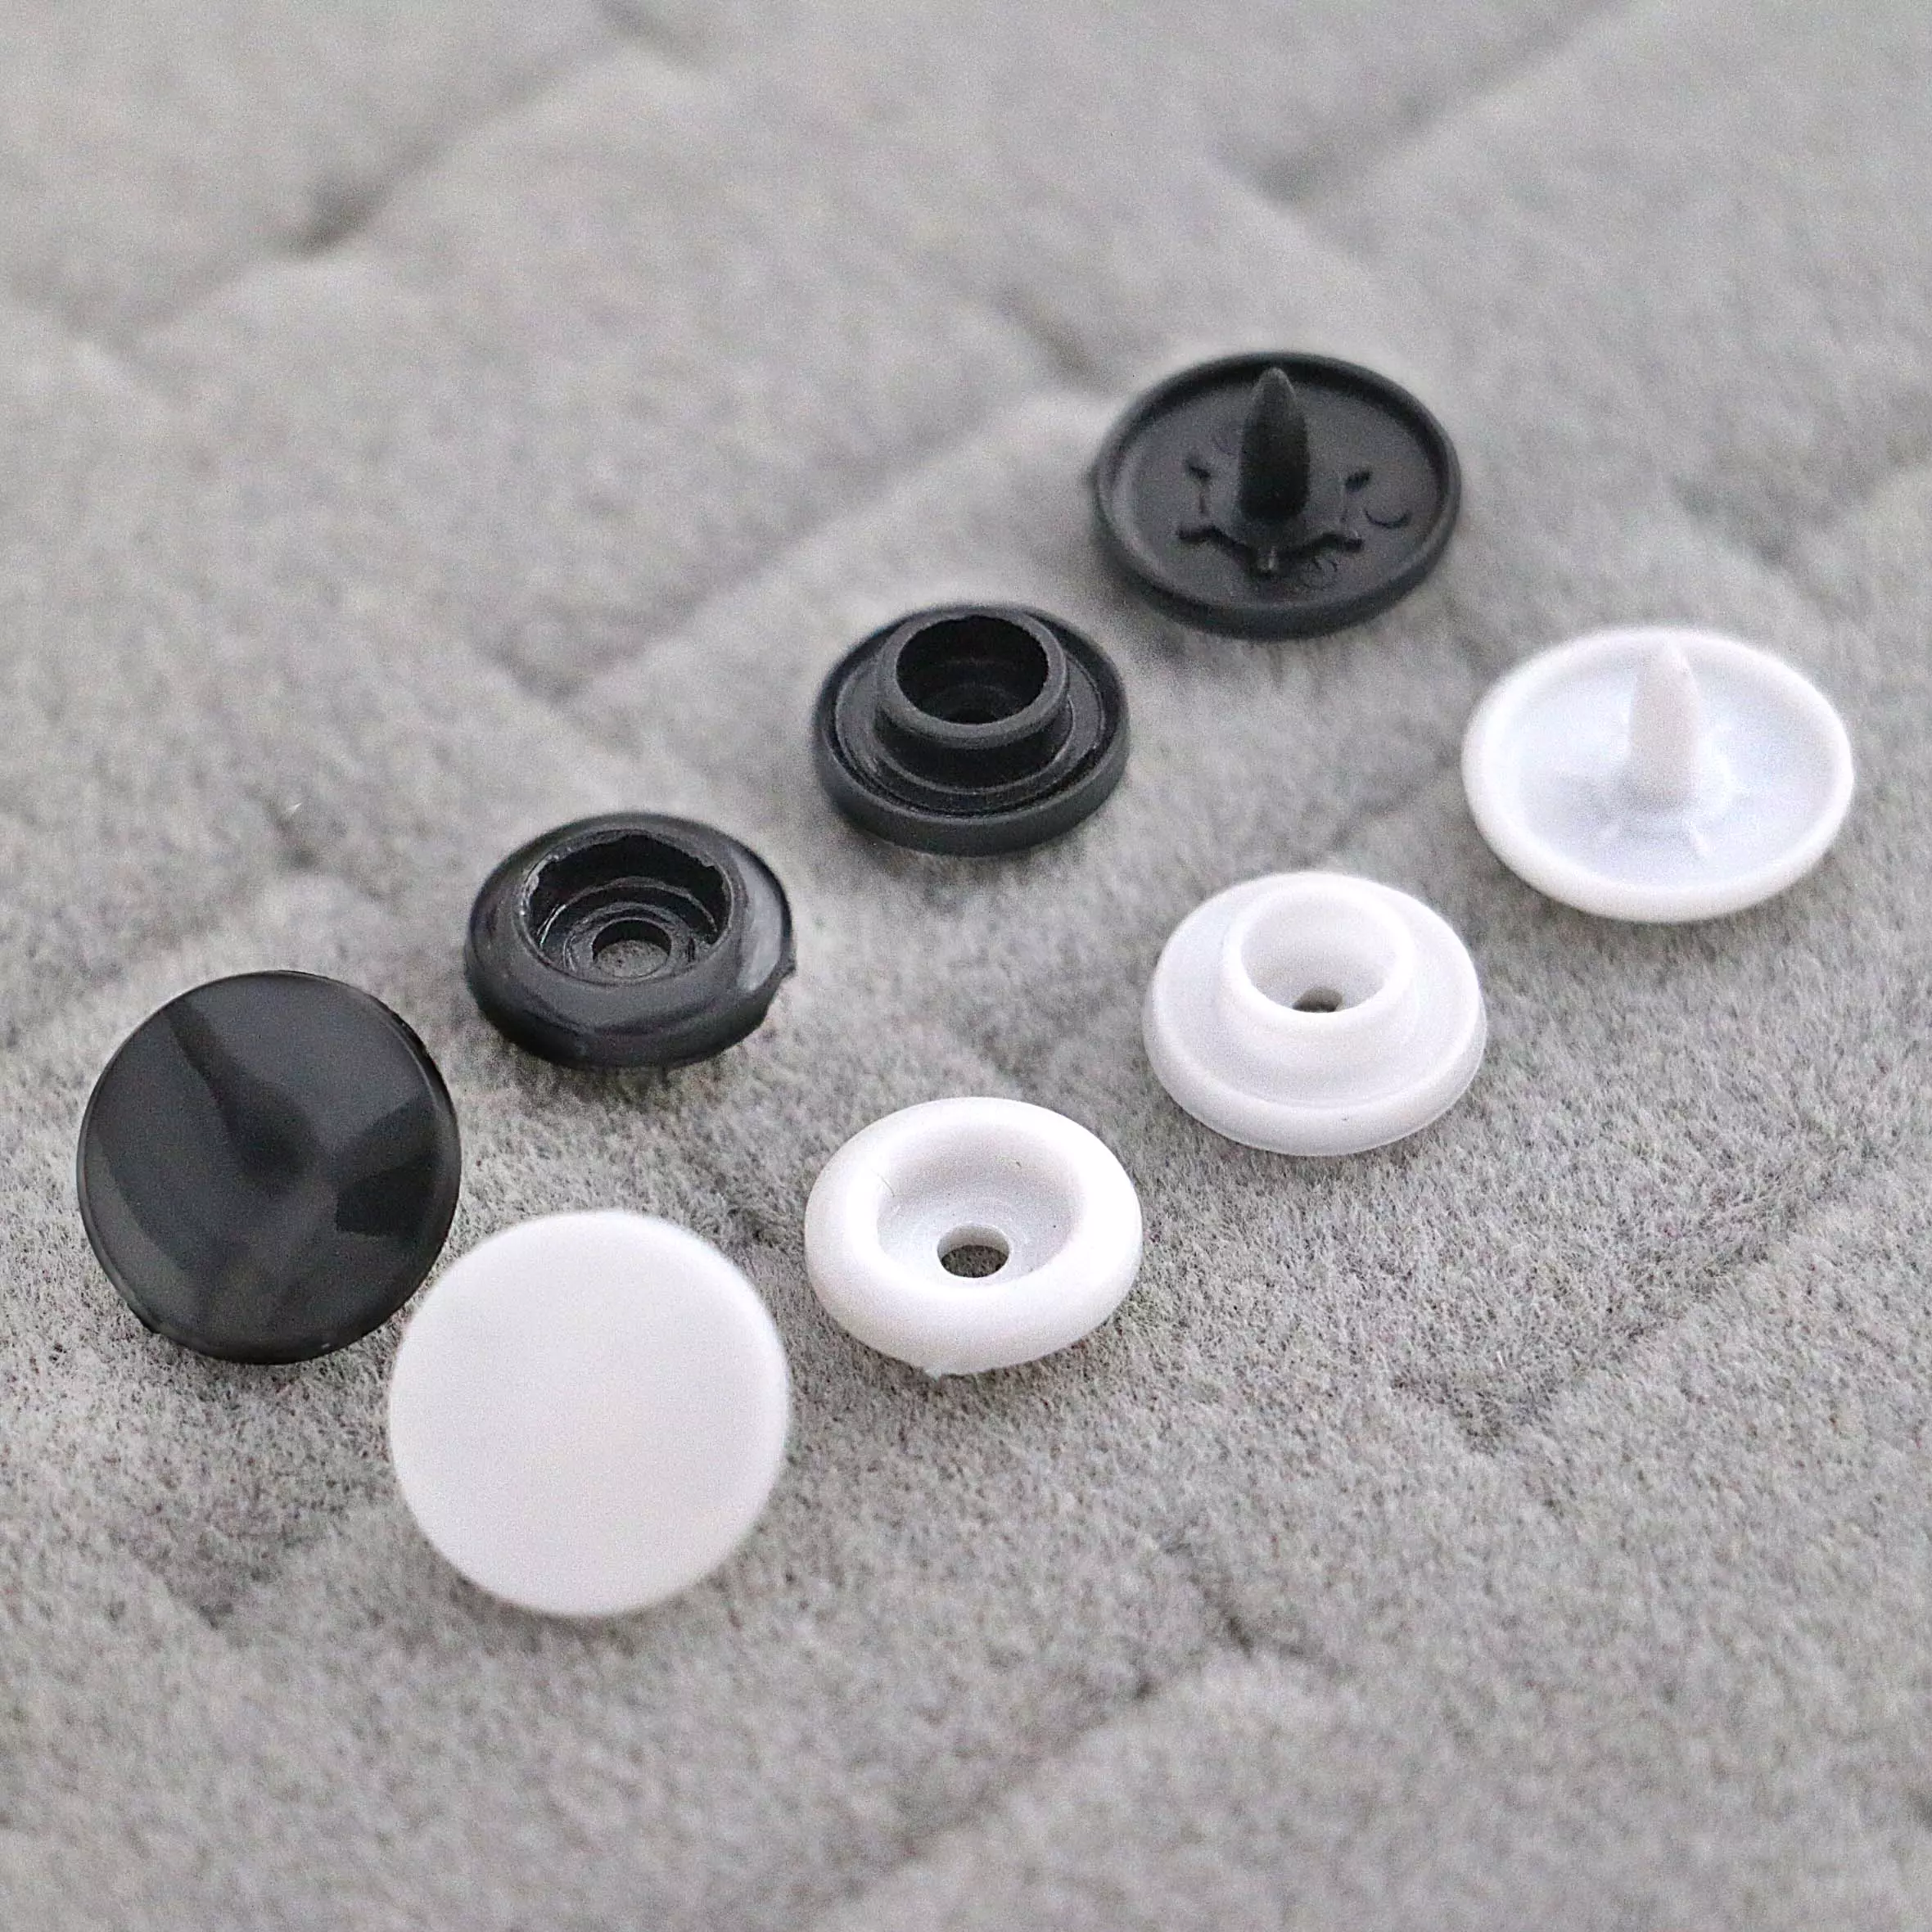 KAM Plastic Snaps Button Snap Fasteners Size 20 Sets B19 Pastel